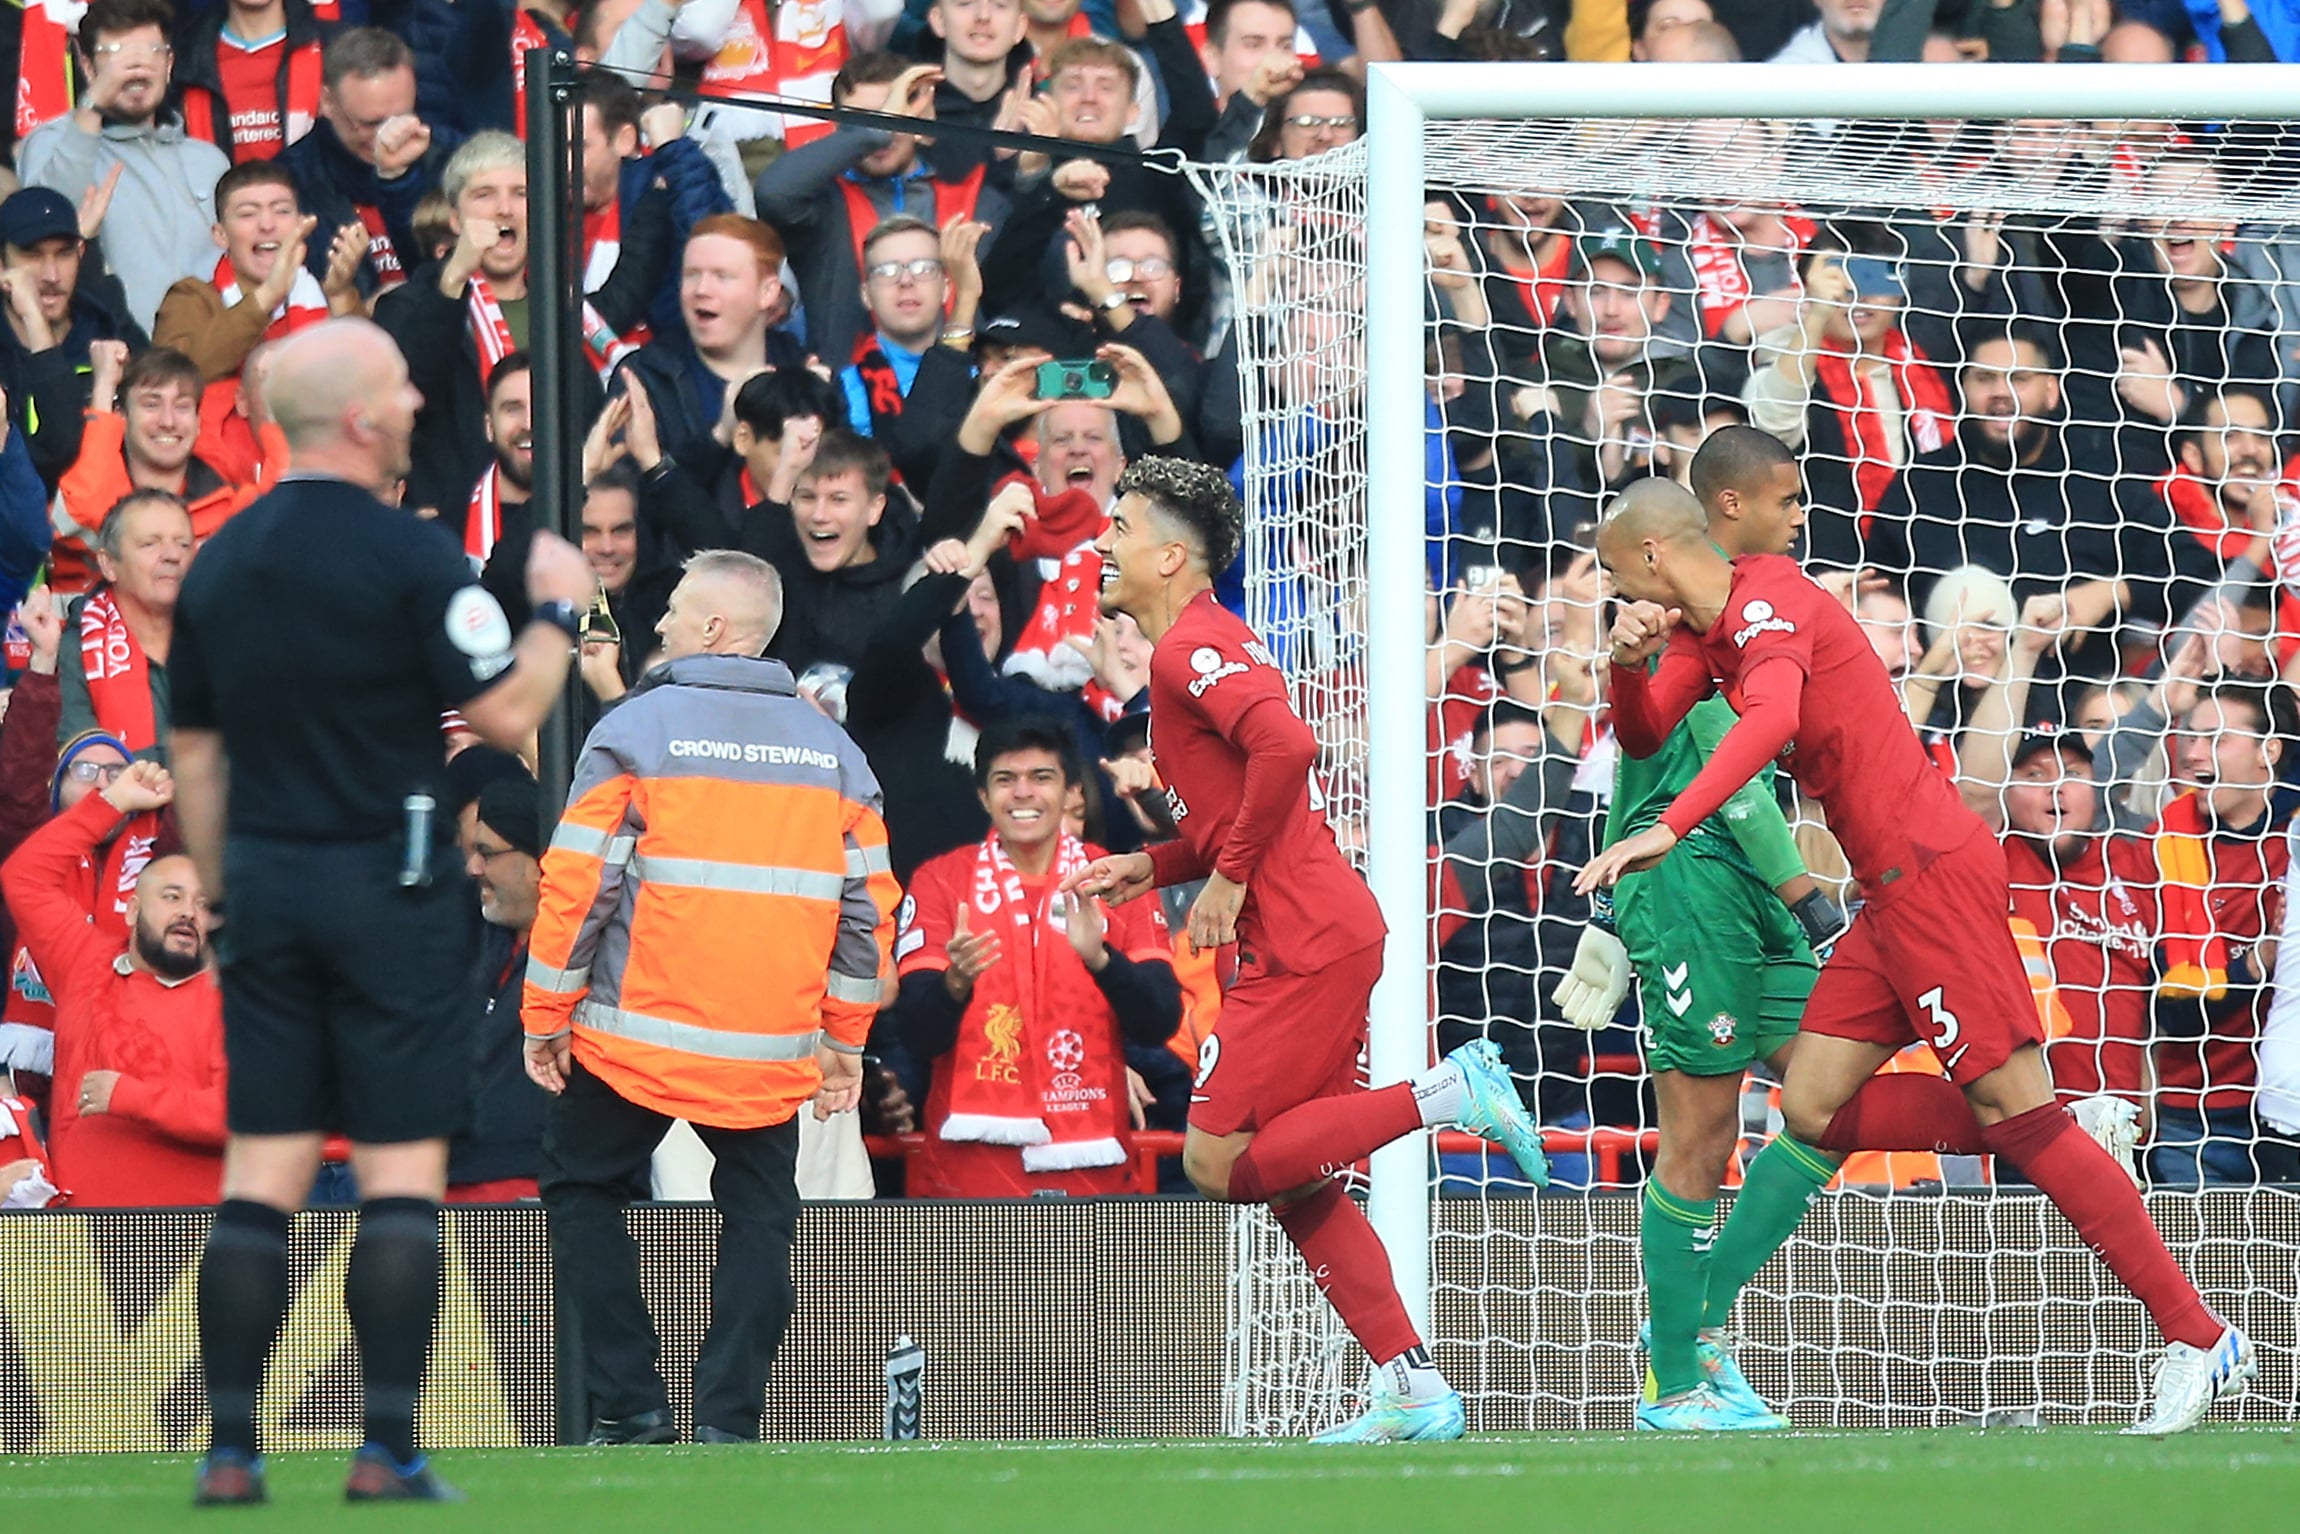 Liverpool vs Southampton HIGHLIGHTS: LIV 3-1 SOU, Darwin Nunez shines as Liverpool SAIL past Southampton with dominant win -CHECK HIGHLIGHTS